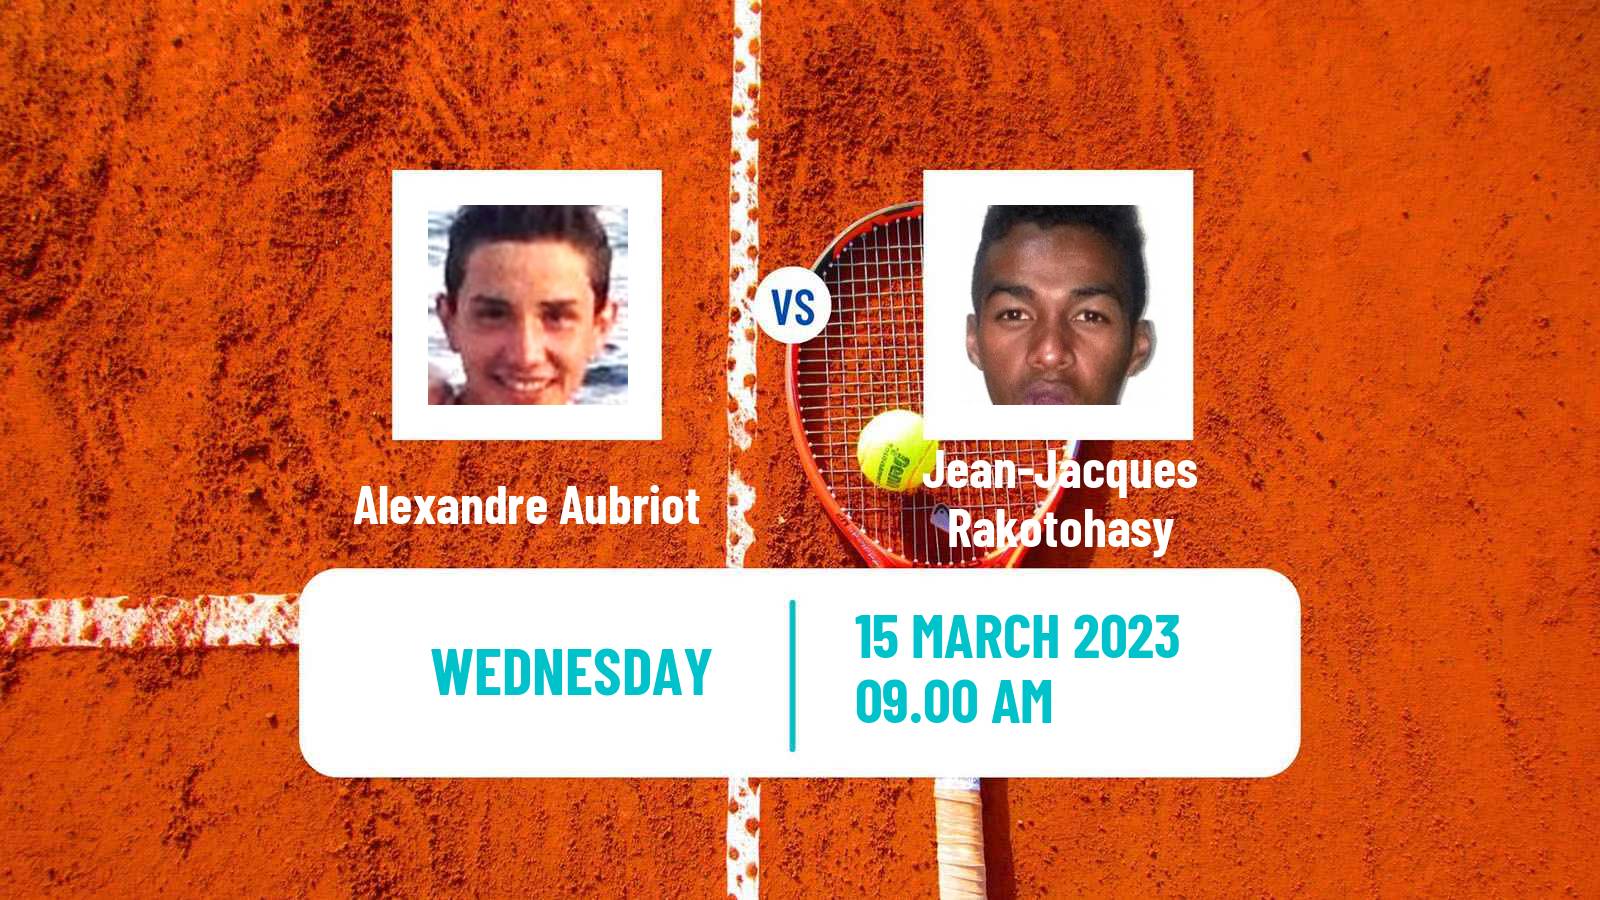 Tennis ITF Tournaments Alexandre Aubriot - Jean-Jacques Rakotohasy